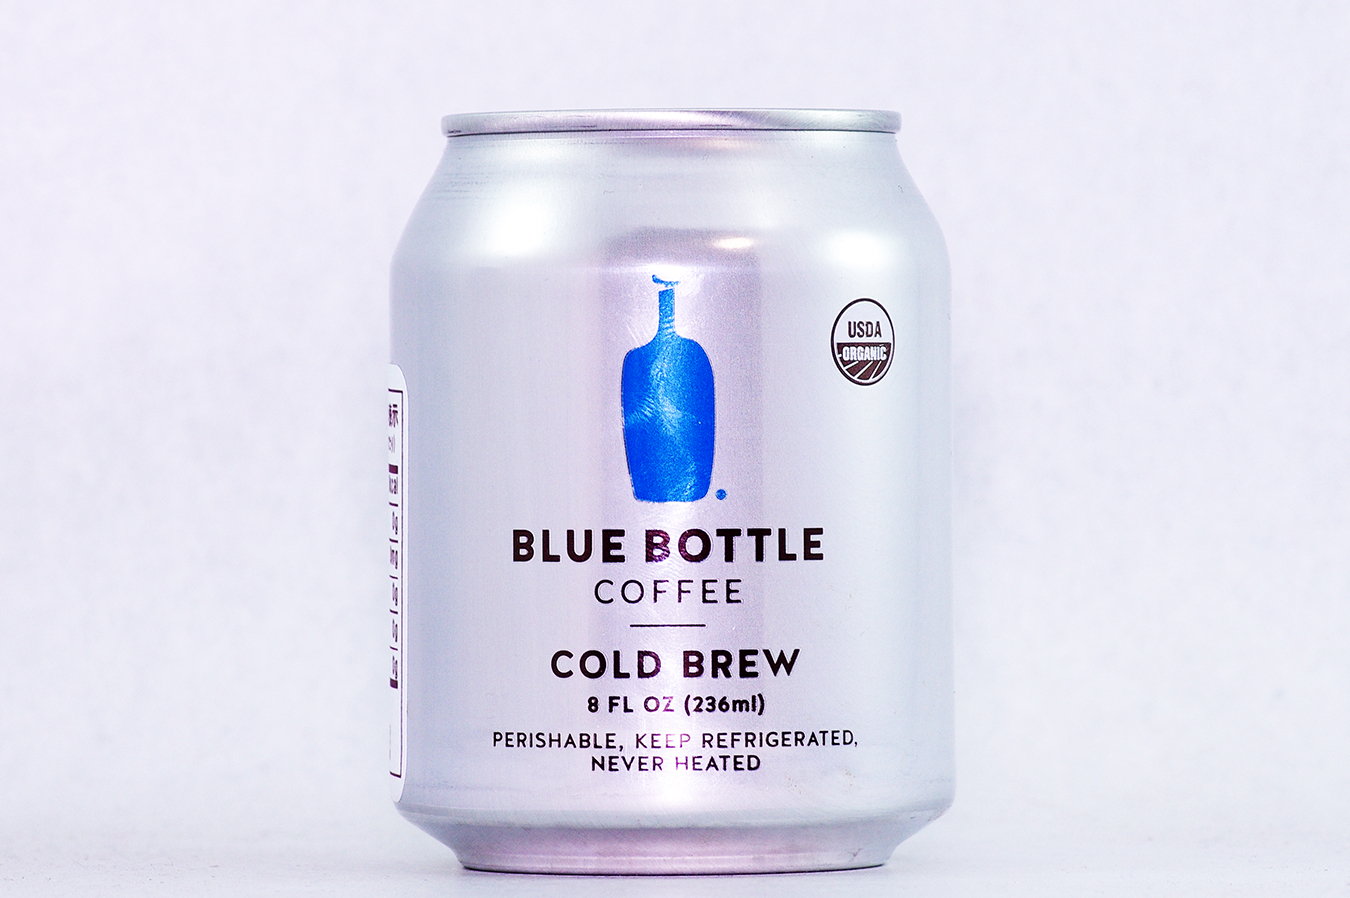 BLUE BOTTLE COFFEE COLD BREW 表面 2017年3月